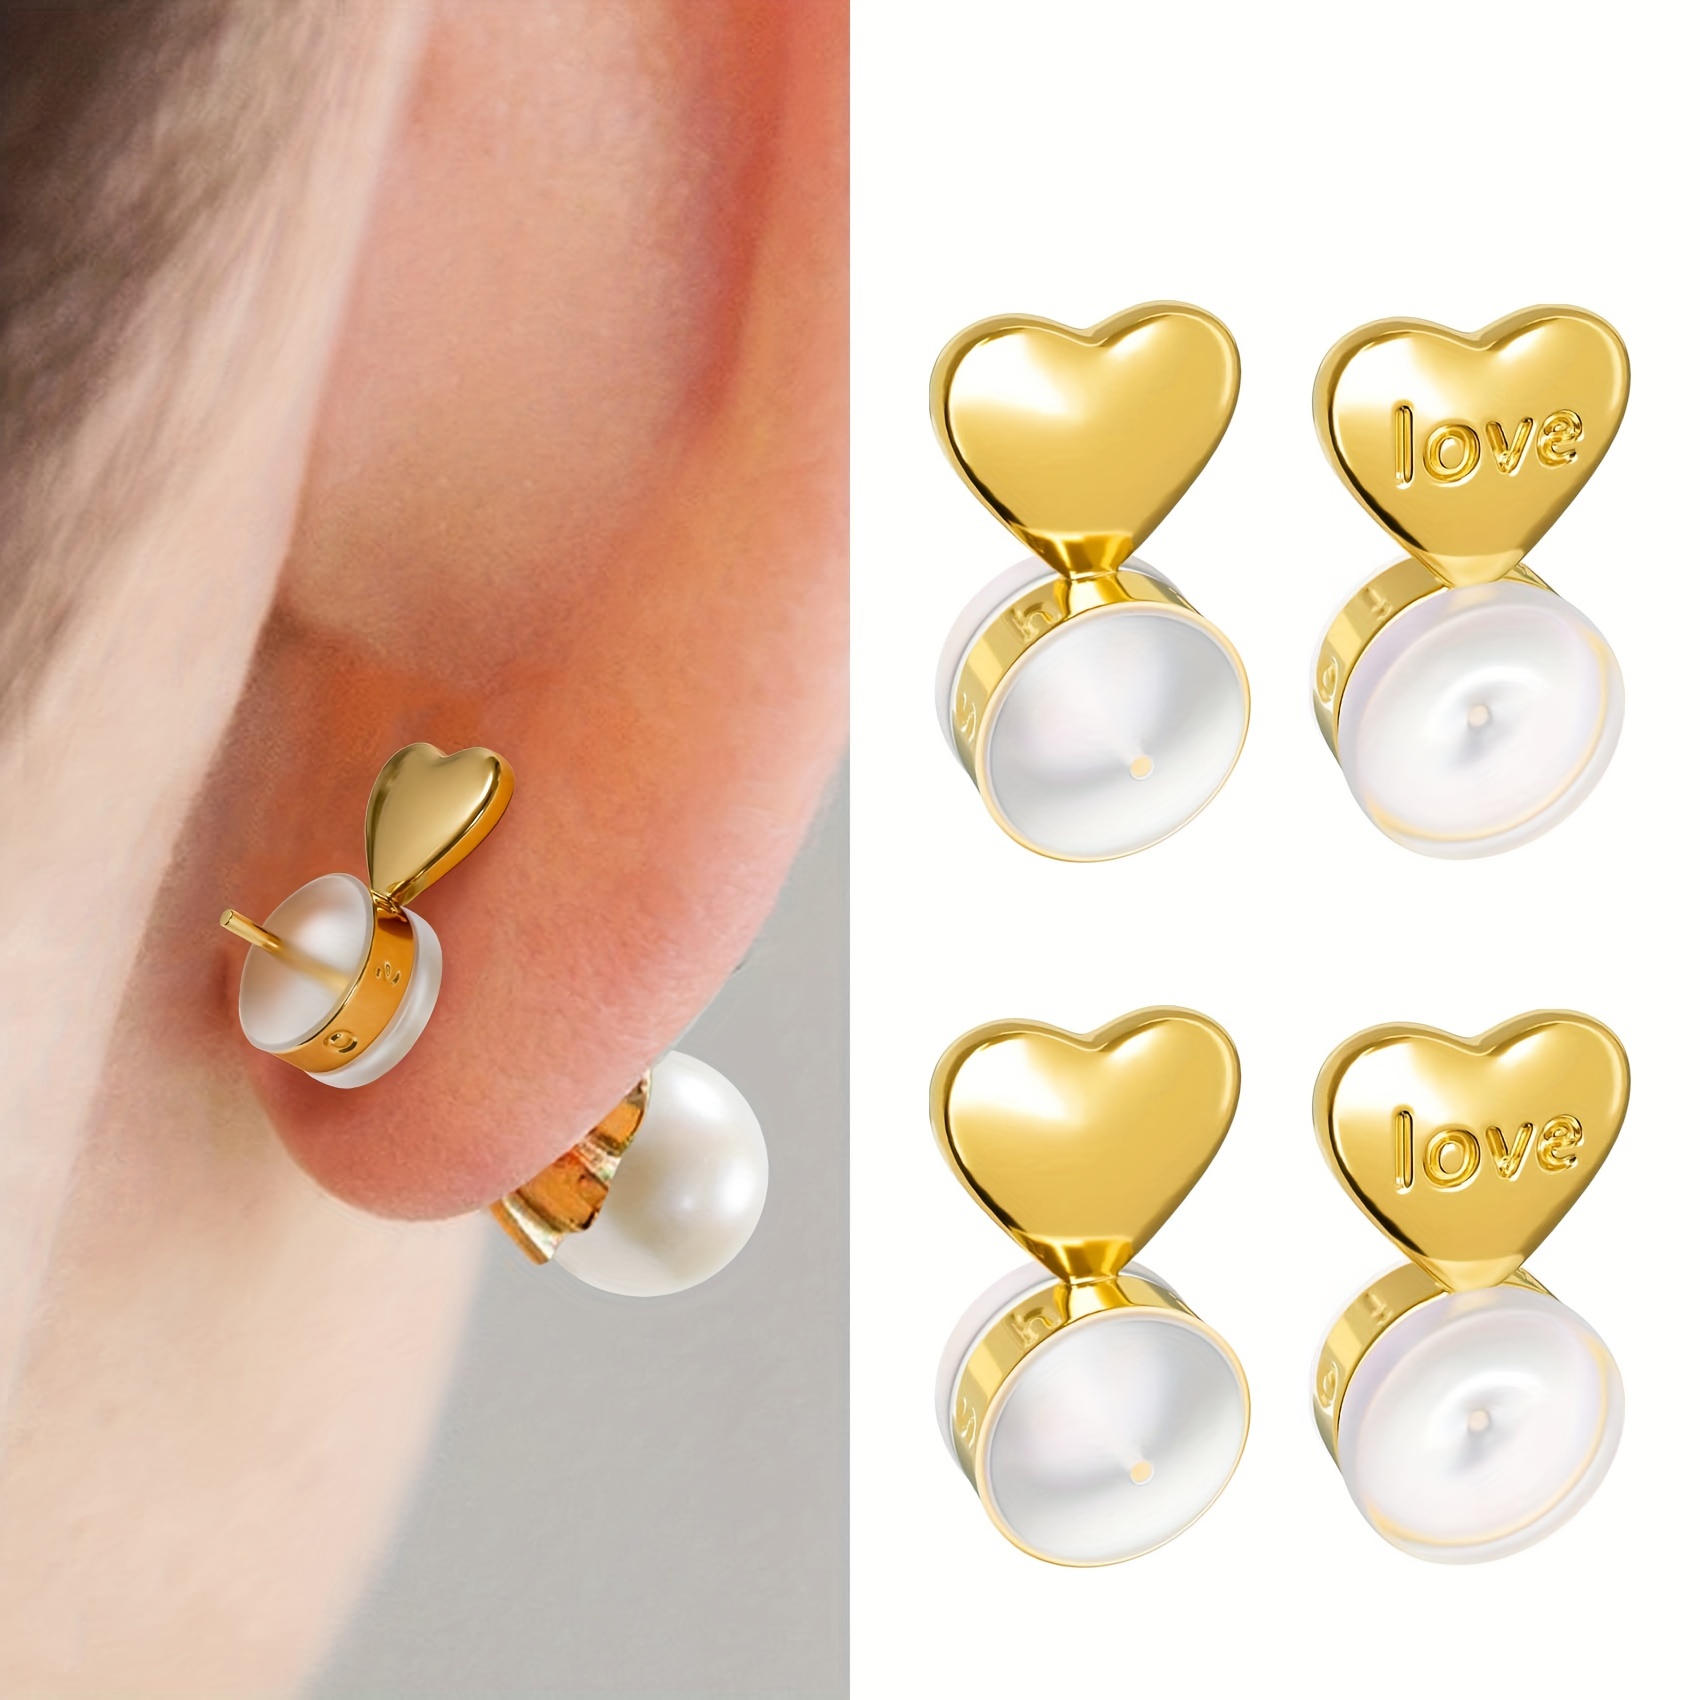 3-Pairs Earring Backs Adjustable Hypoallergenic Secure Earring Backs for  Heavy Earrings, (Gold)